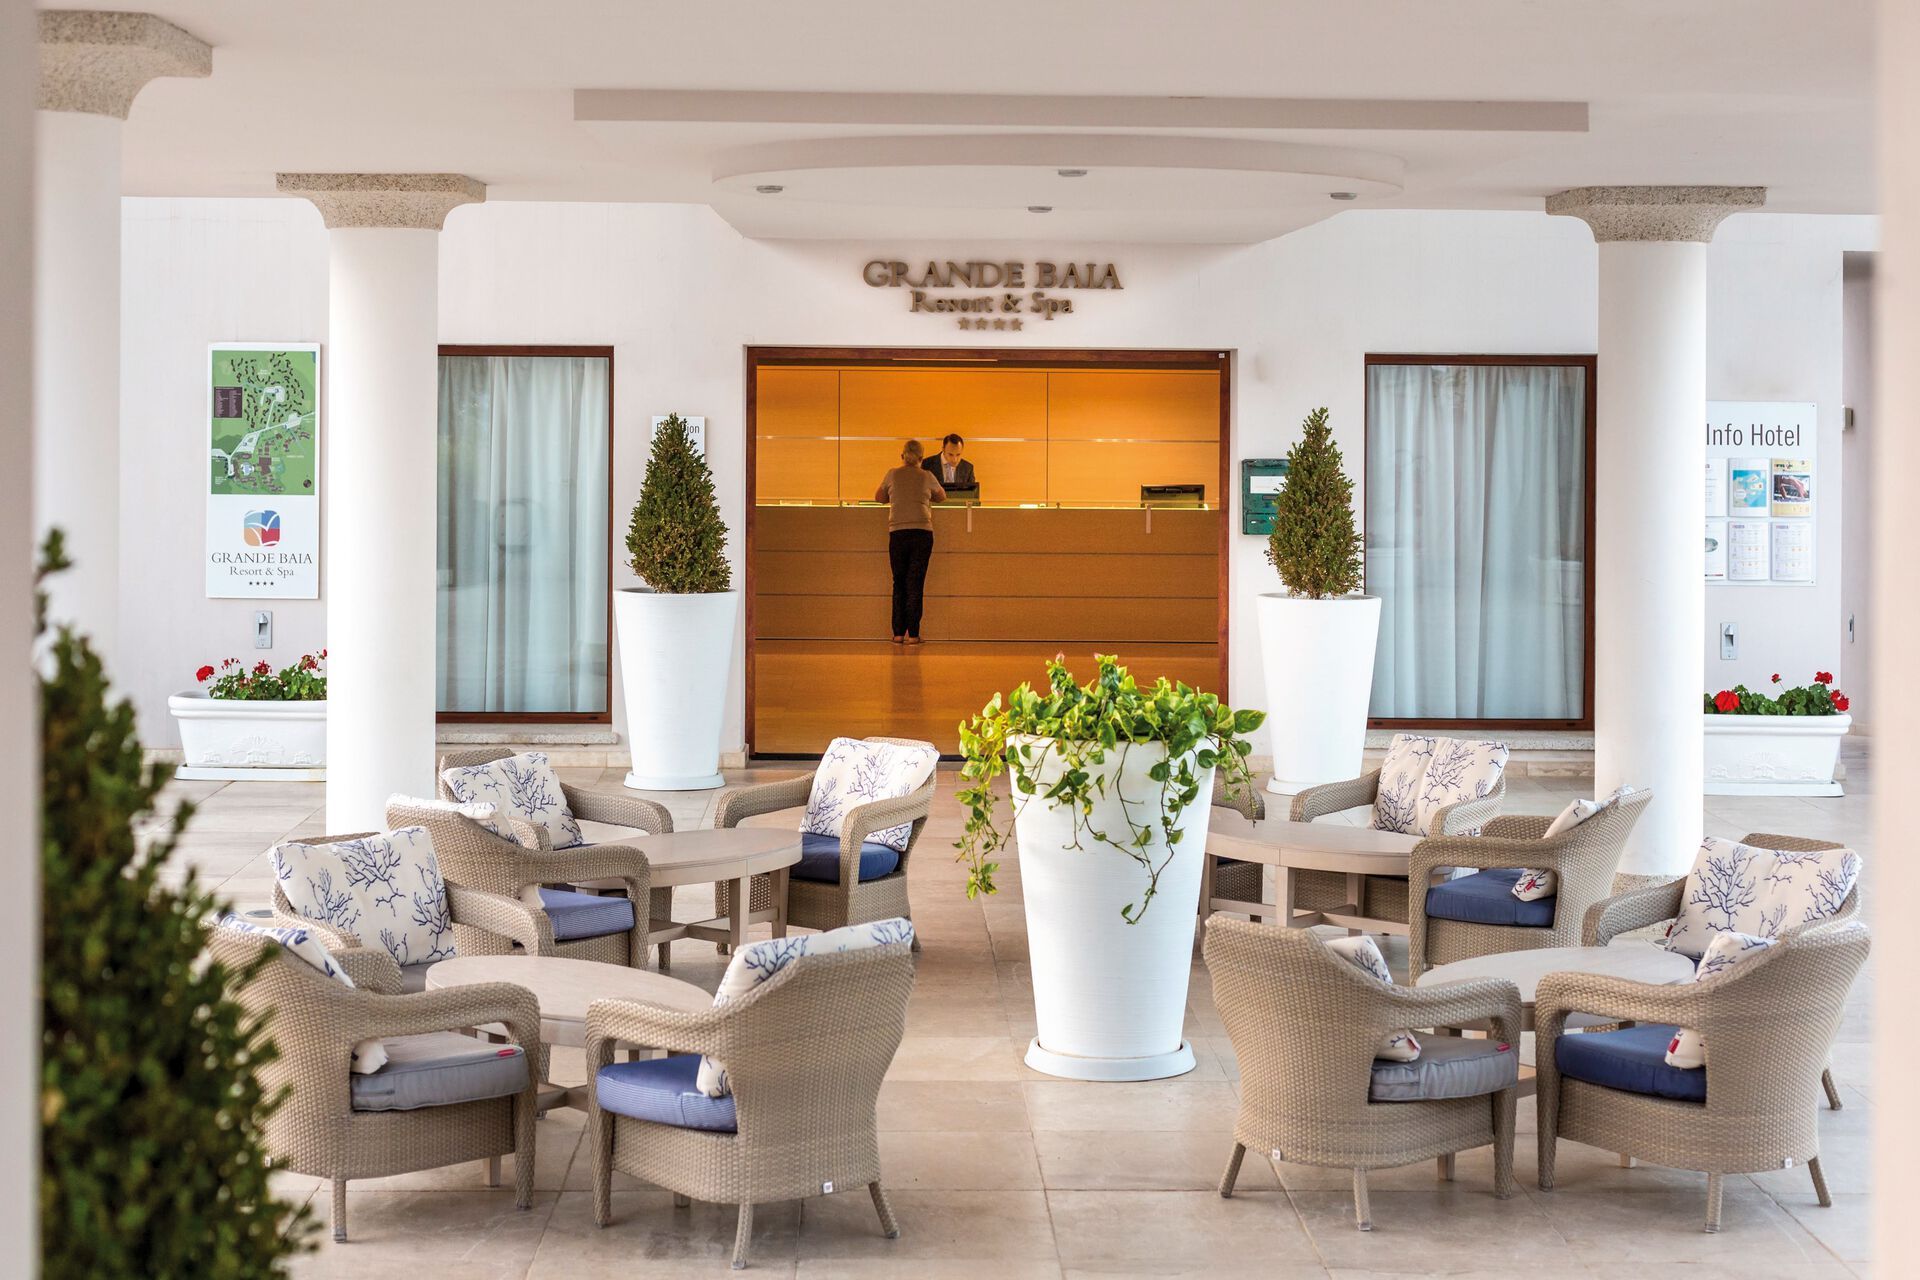 Italie - Sardaigne - Hôtel Grande Baia Resort 4*